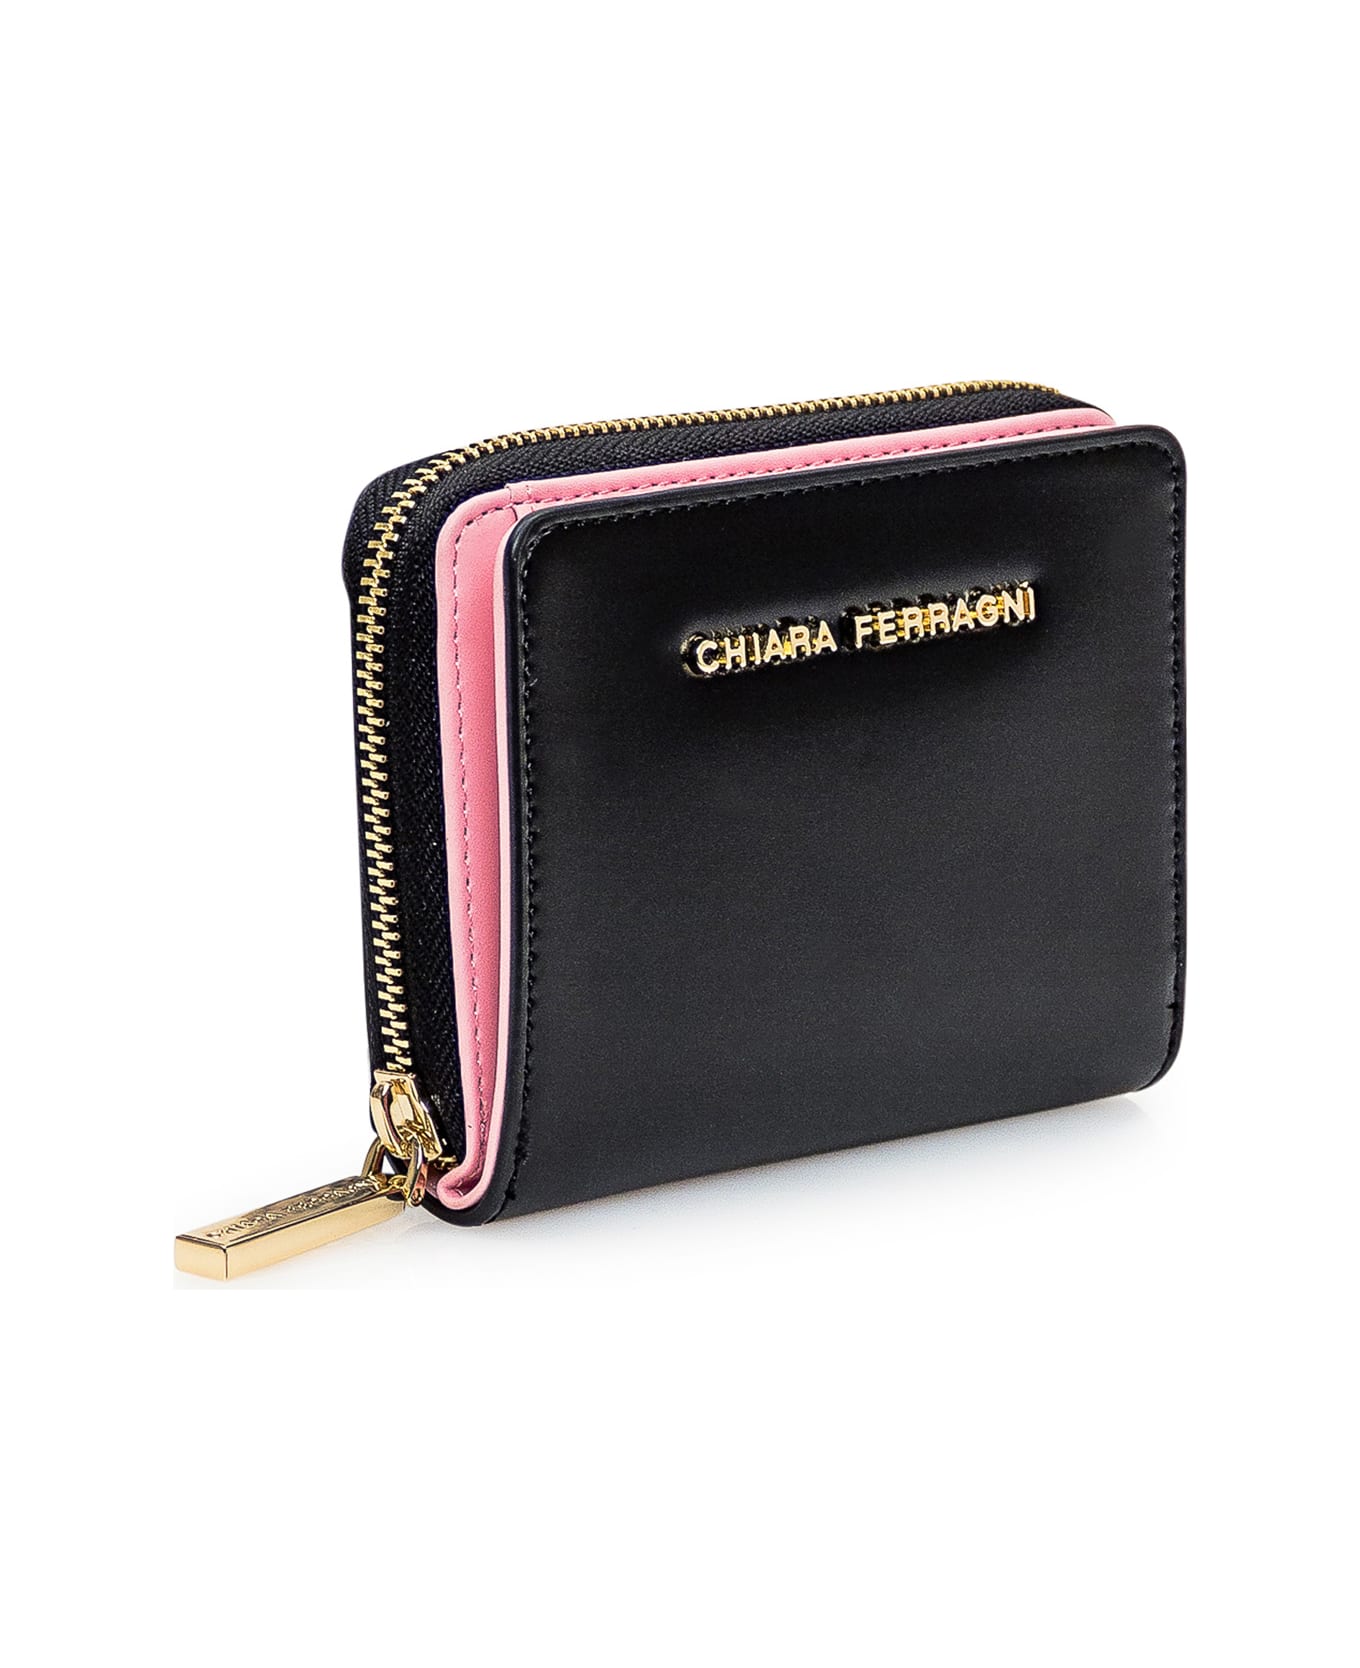 Chiara Ferragni Wallet With Logo - BLACK